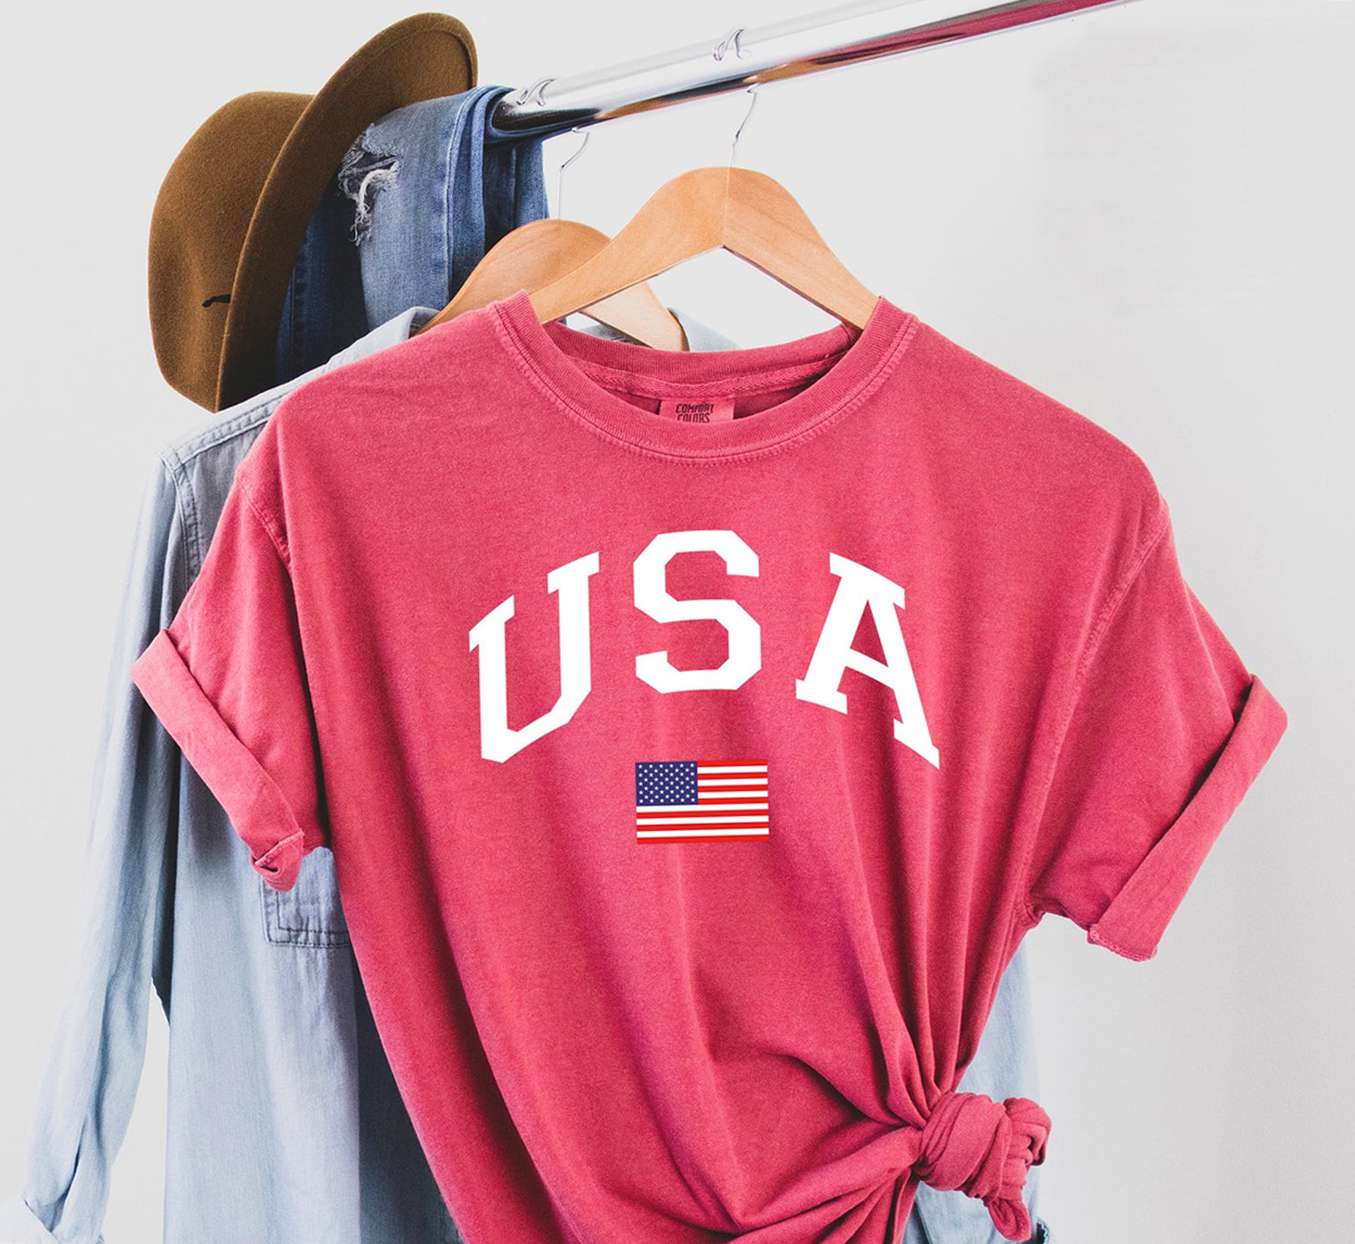 Patriotic Shirt USA T-shirt America Shirt USA Shirt 4th of July Camping USA shirt Gift,Short-Sleeve Unisex T-Shirt